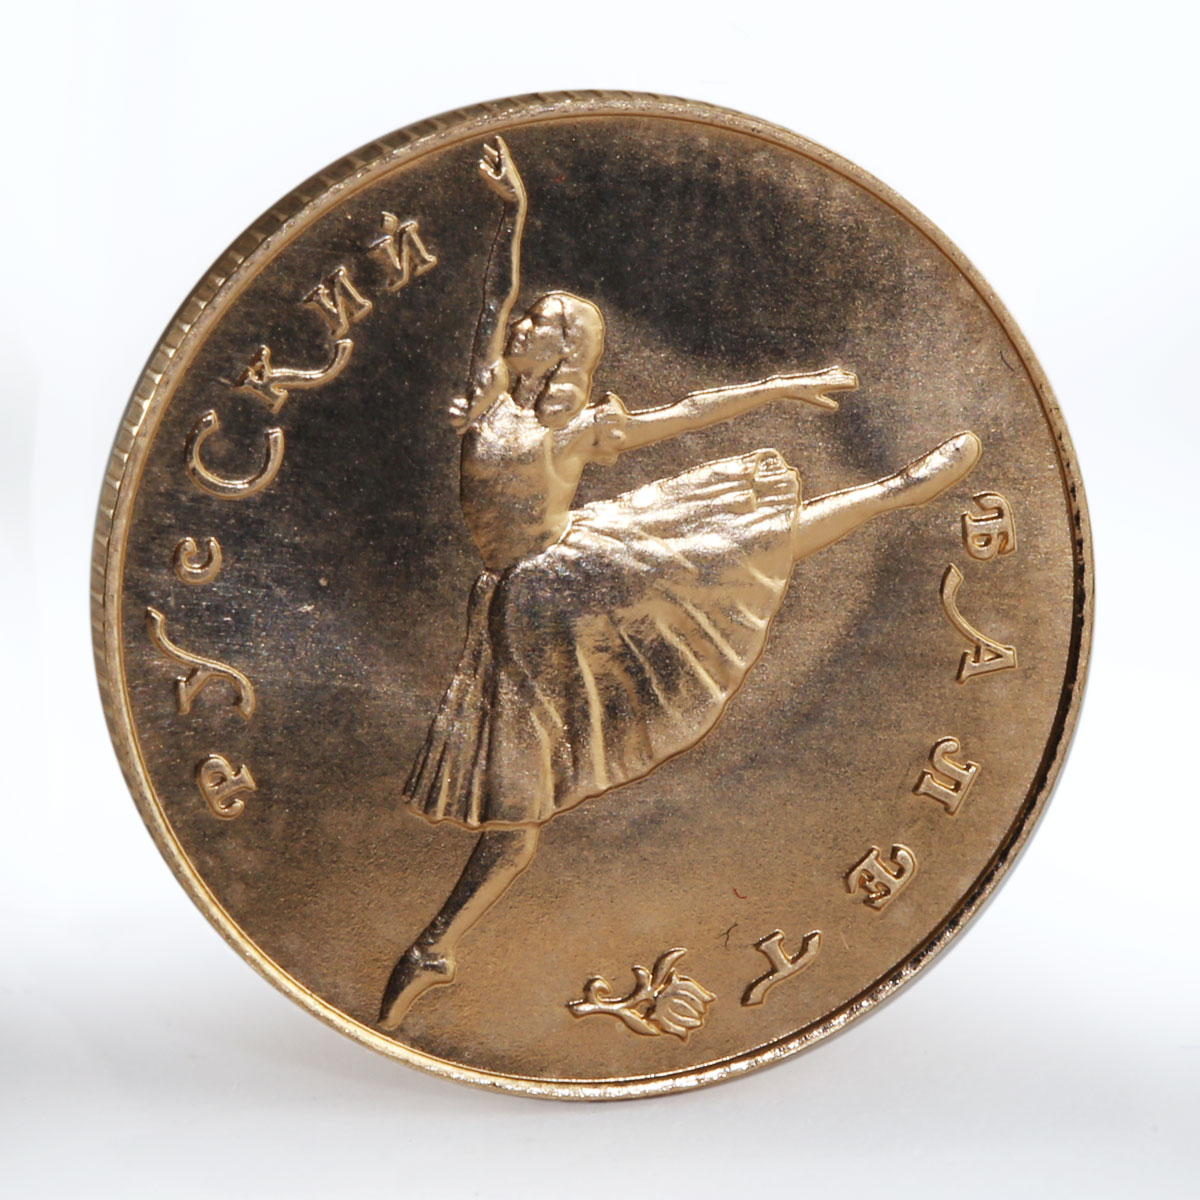 Soviet Union 10 rubles Russian ballet Ballerina Big Theatre Art gold coin 1991